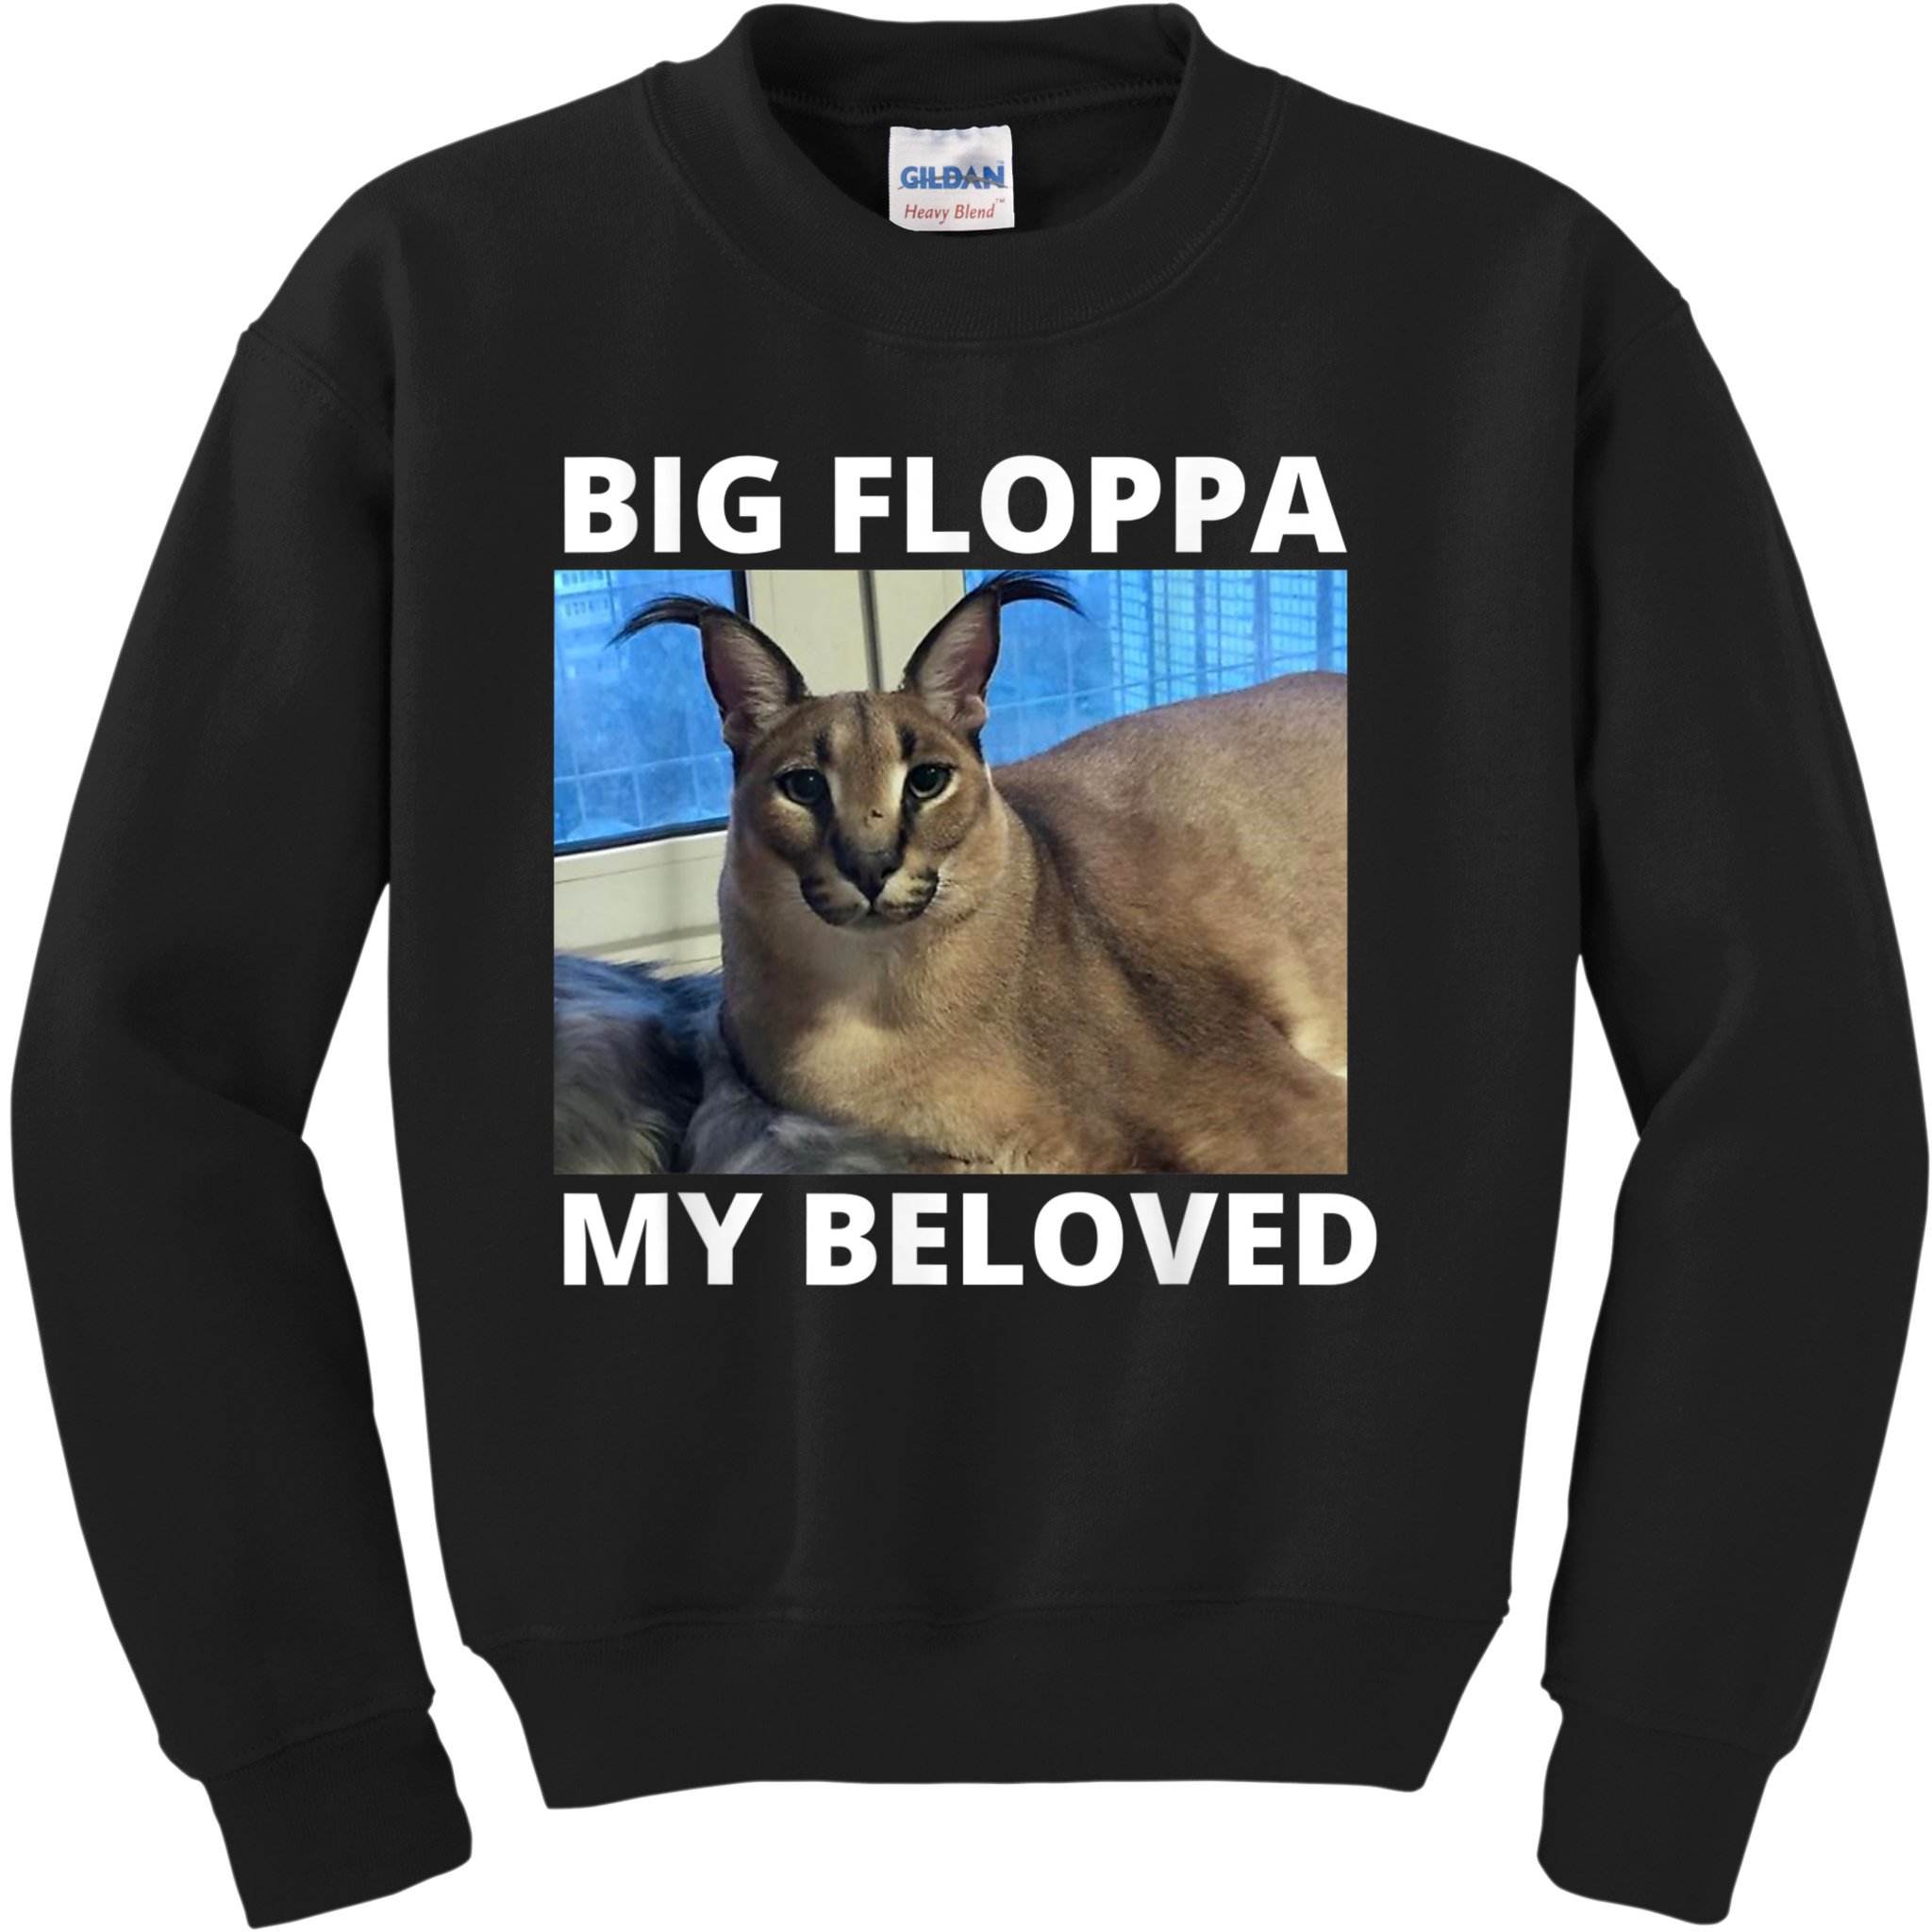  Big Floppa Meme Premium T-Shirt : Clothing, Shoes & Jewelry